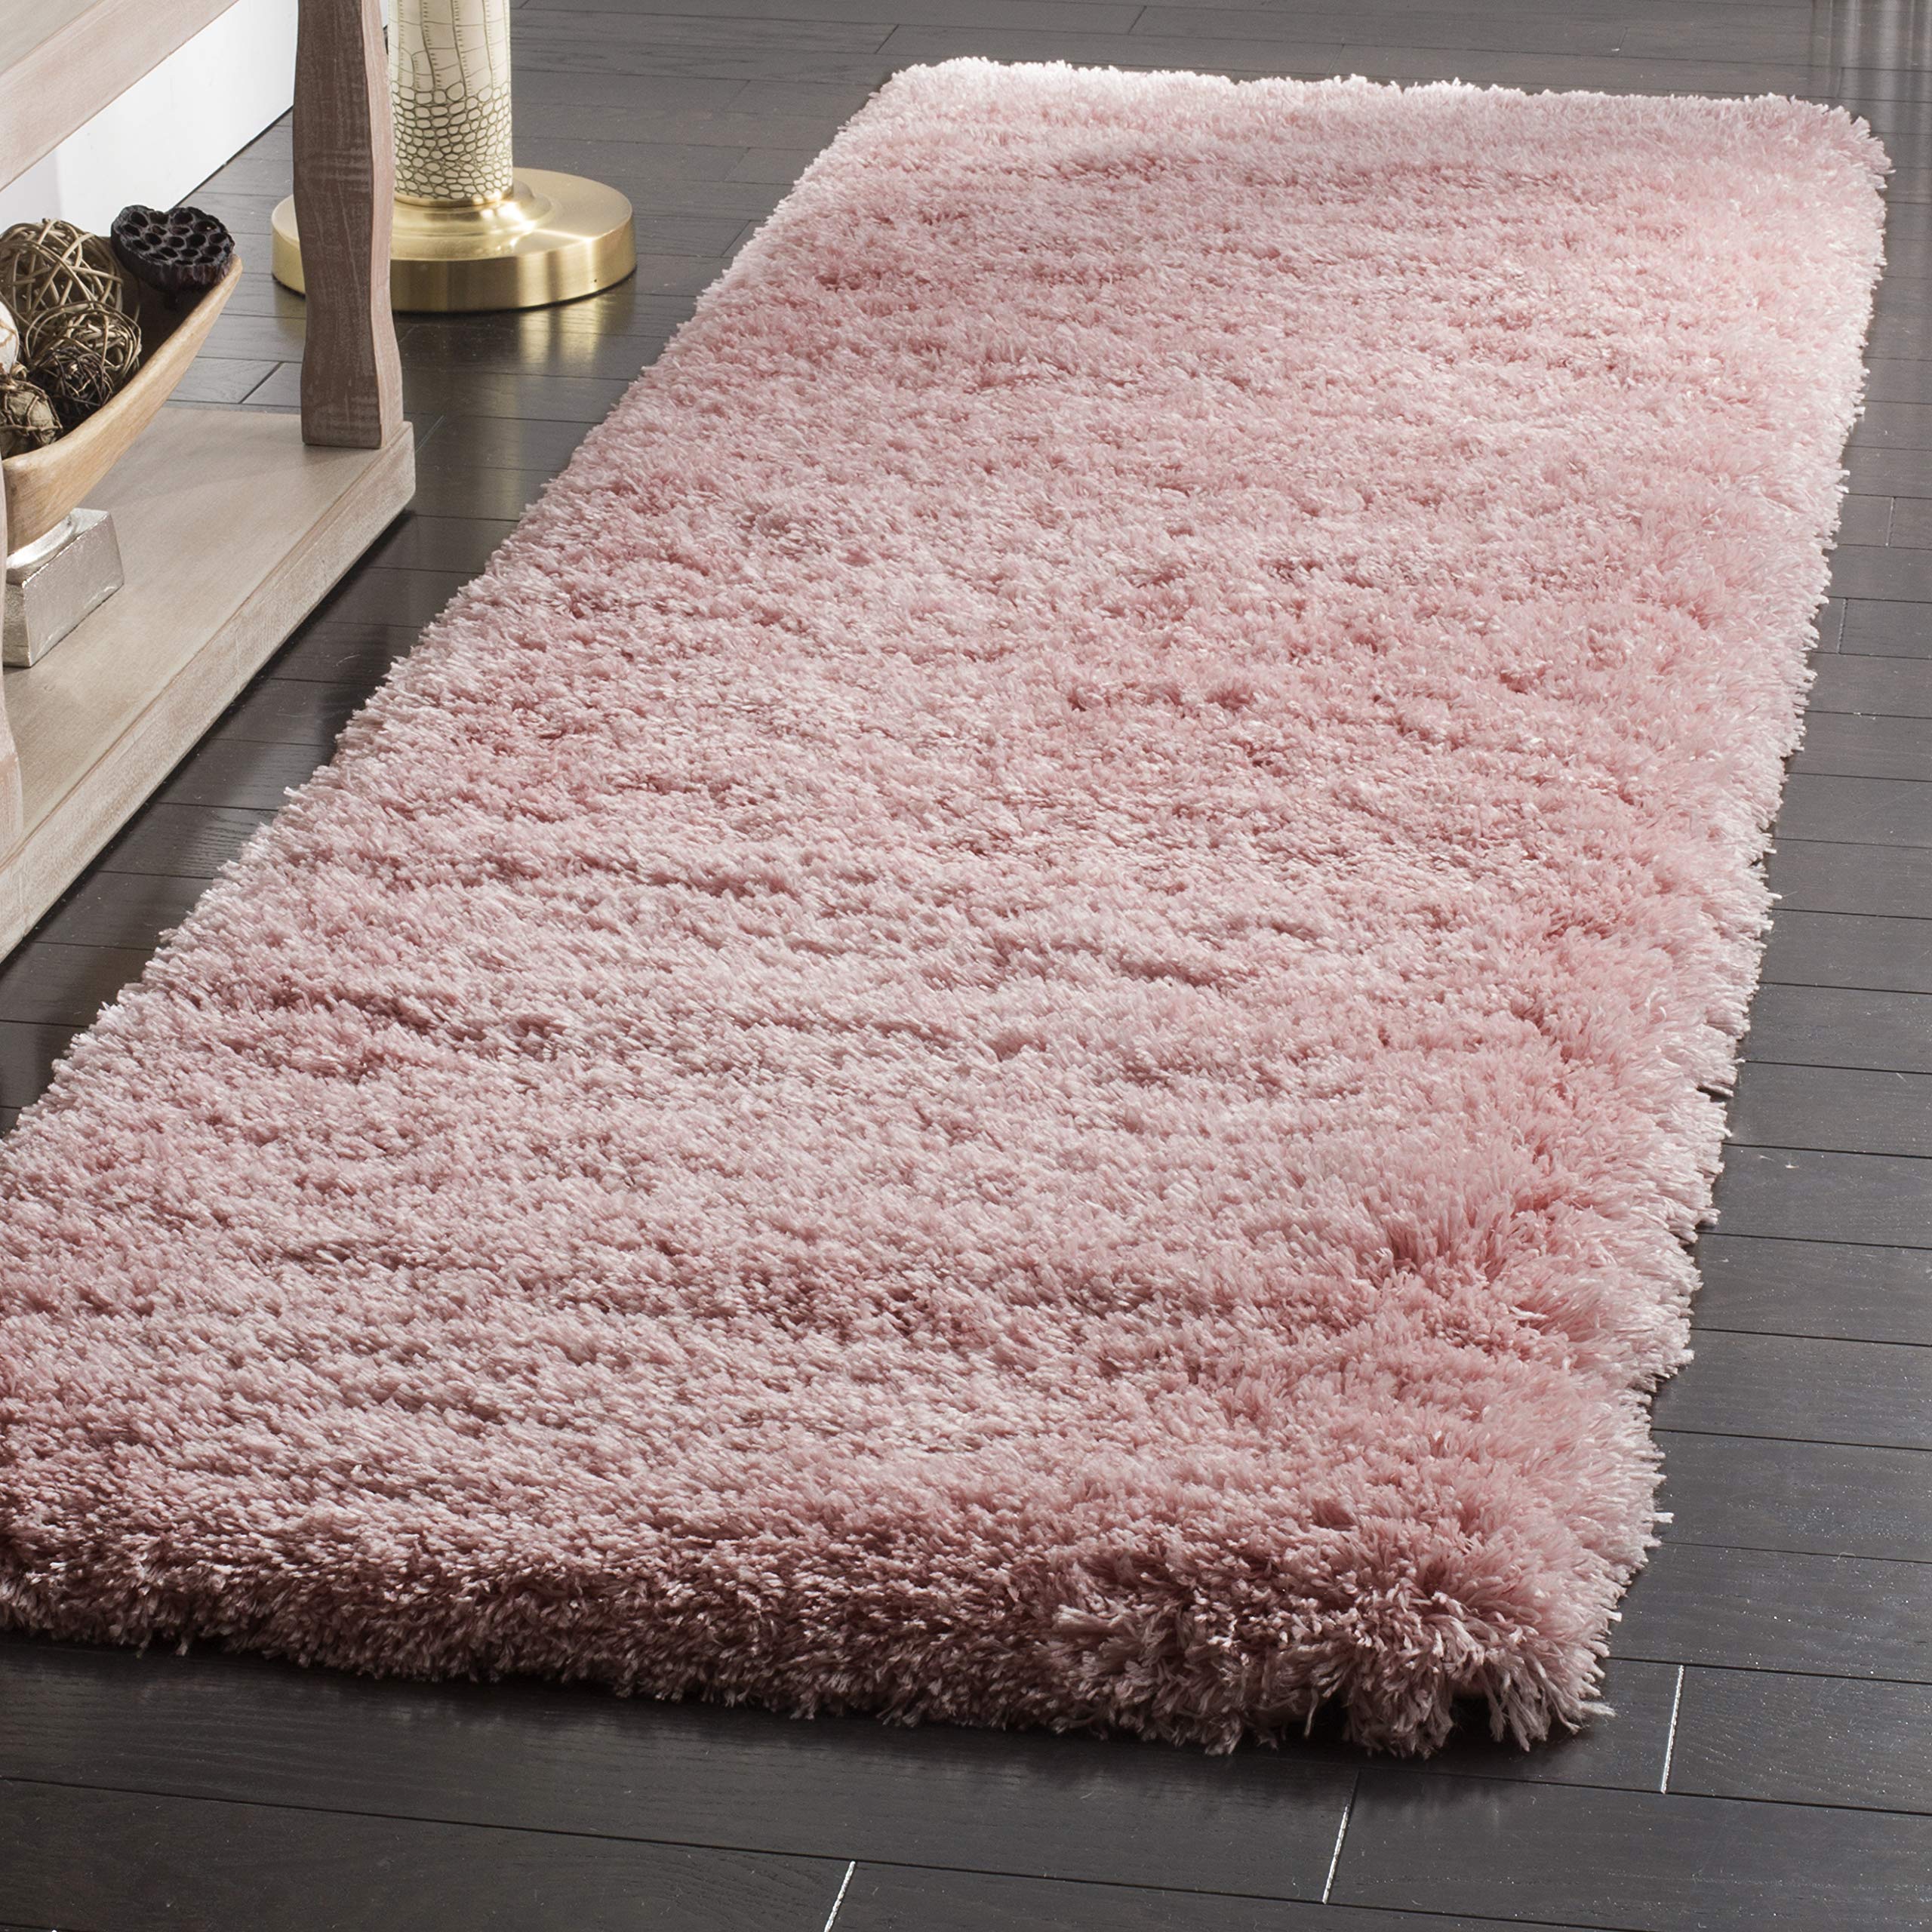  Safavieh Polar Shag 系列长条地毯 - 2 英尺 3 英尺 x 6 英尺，浅粉色，纯色迷人设计，不脱落且易于护理，3 英寸厚，非常适合客厅、卧室的人流密集区域...